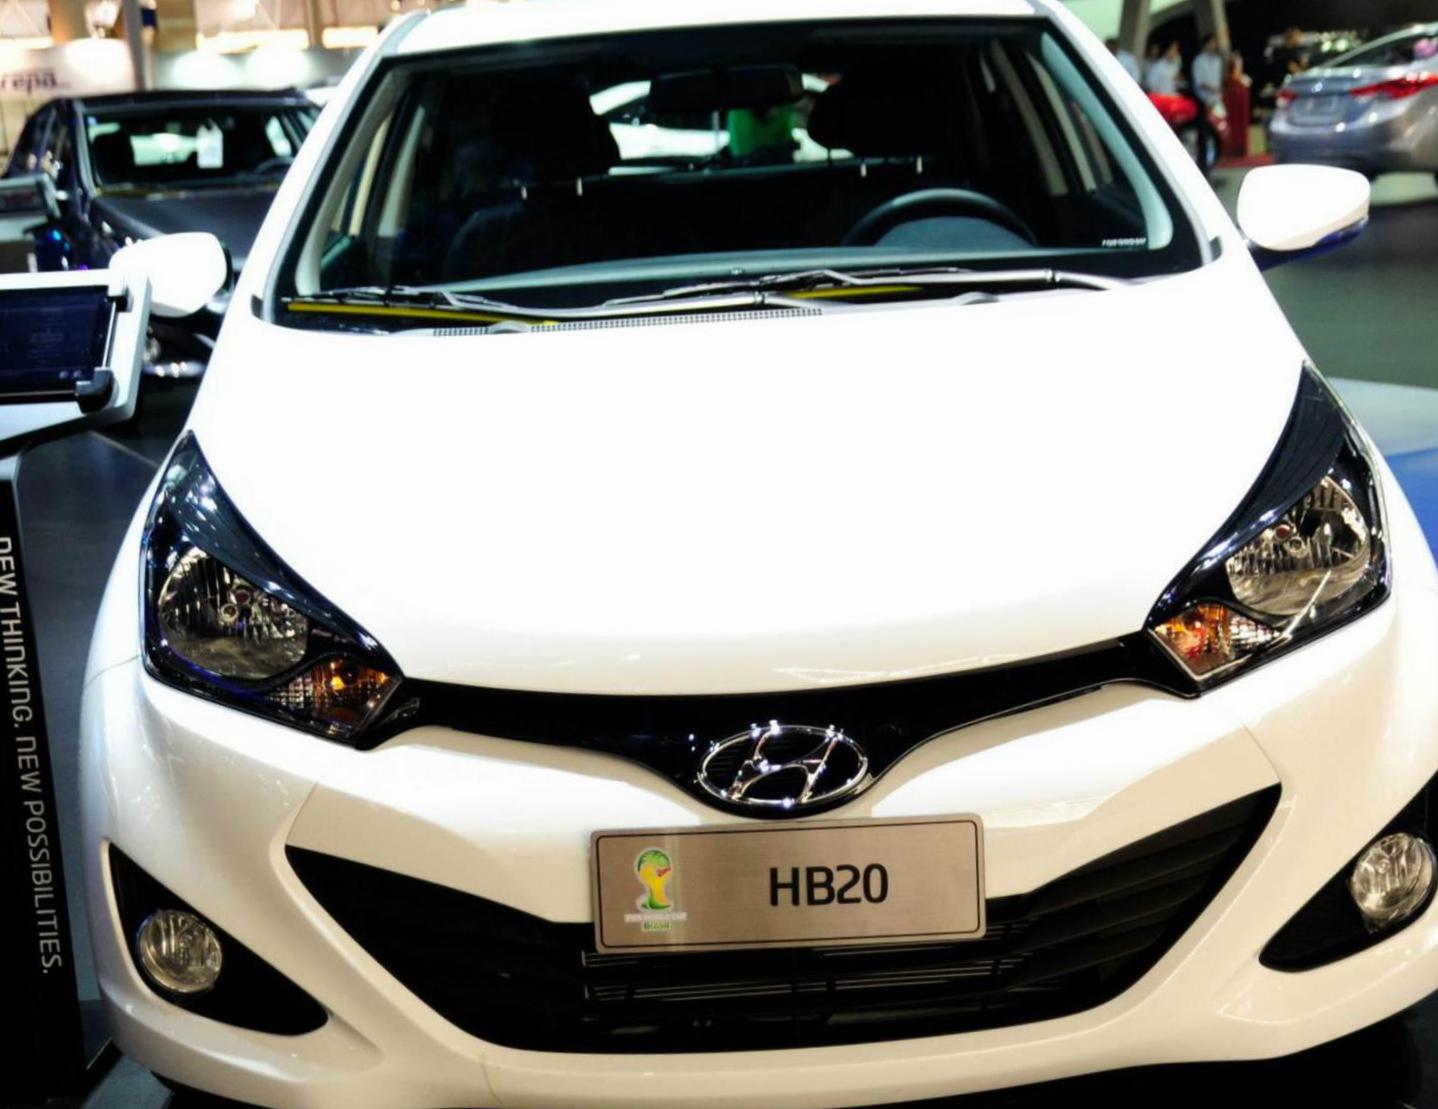 HB20 Hyundai Specifications hatchback